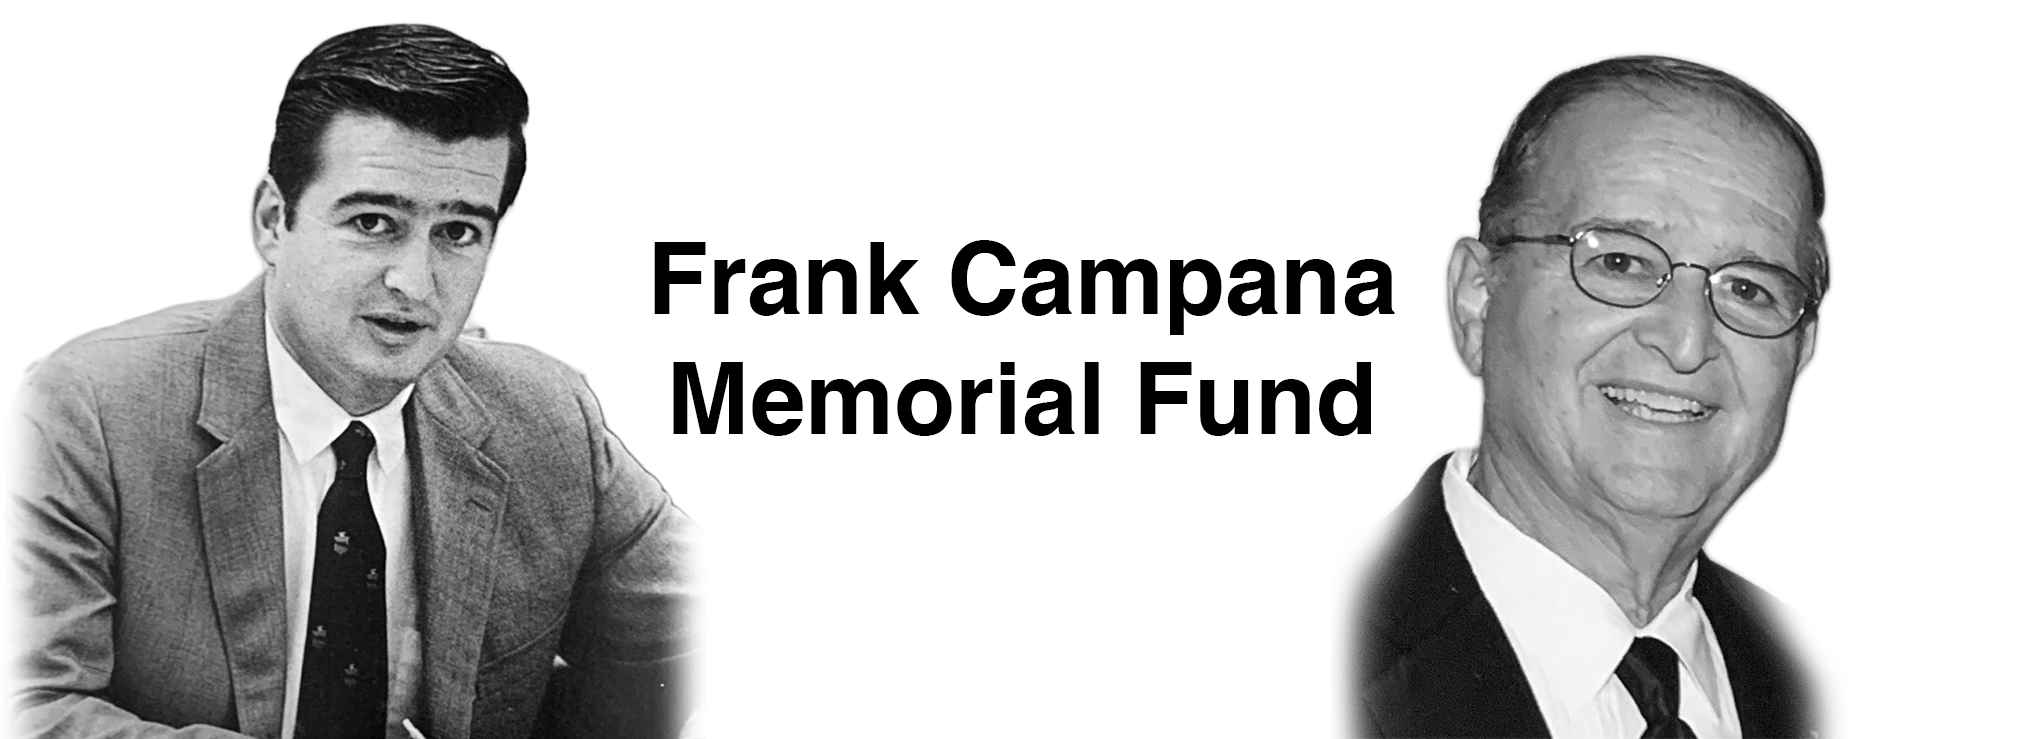 Frank Campana Memorial Fund Banner